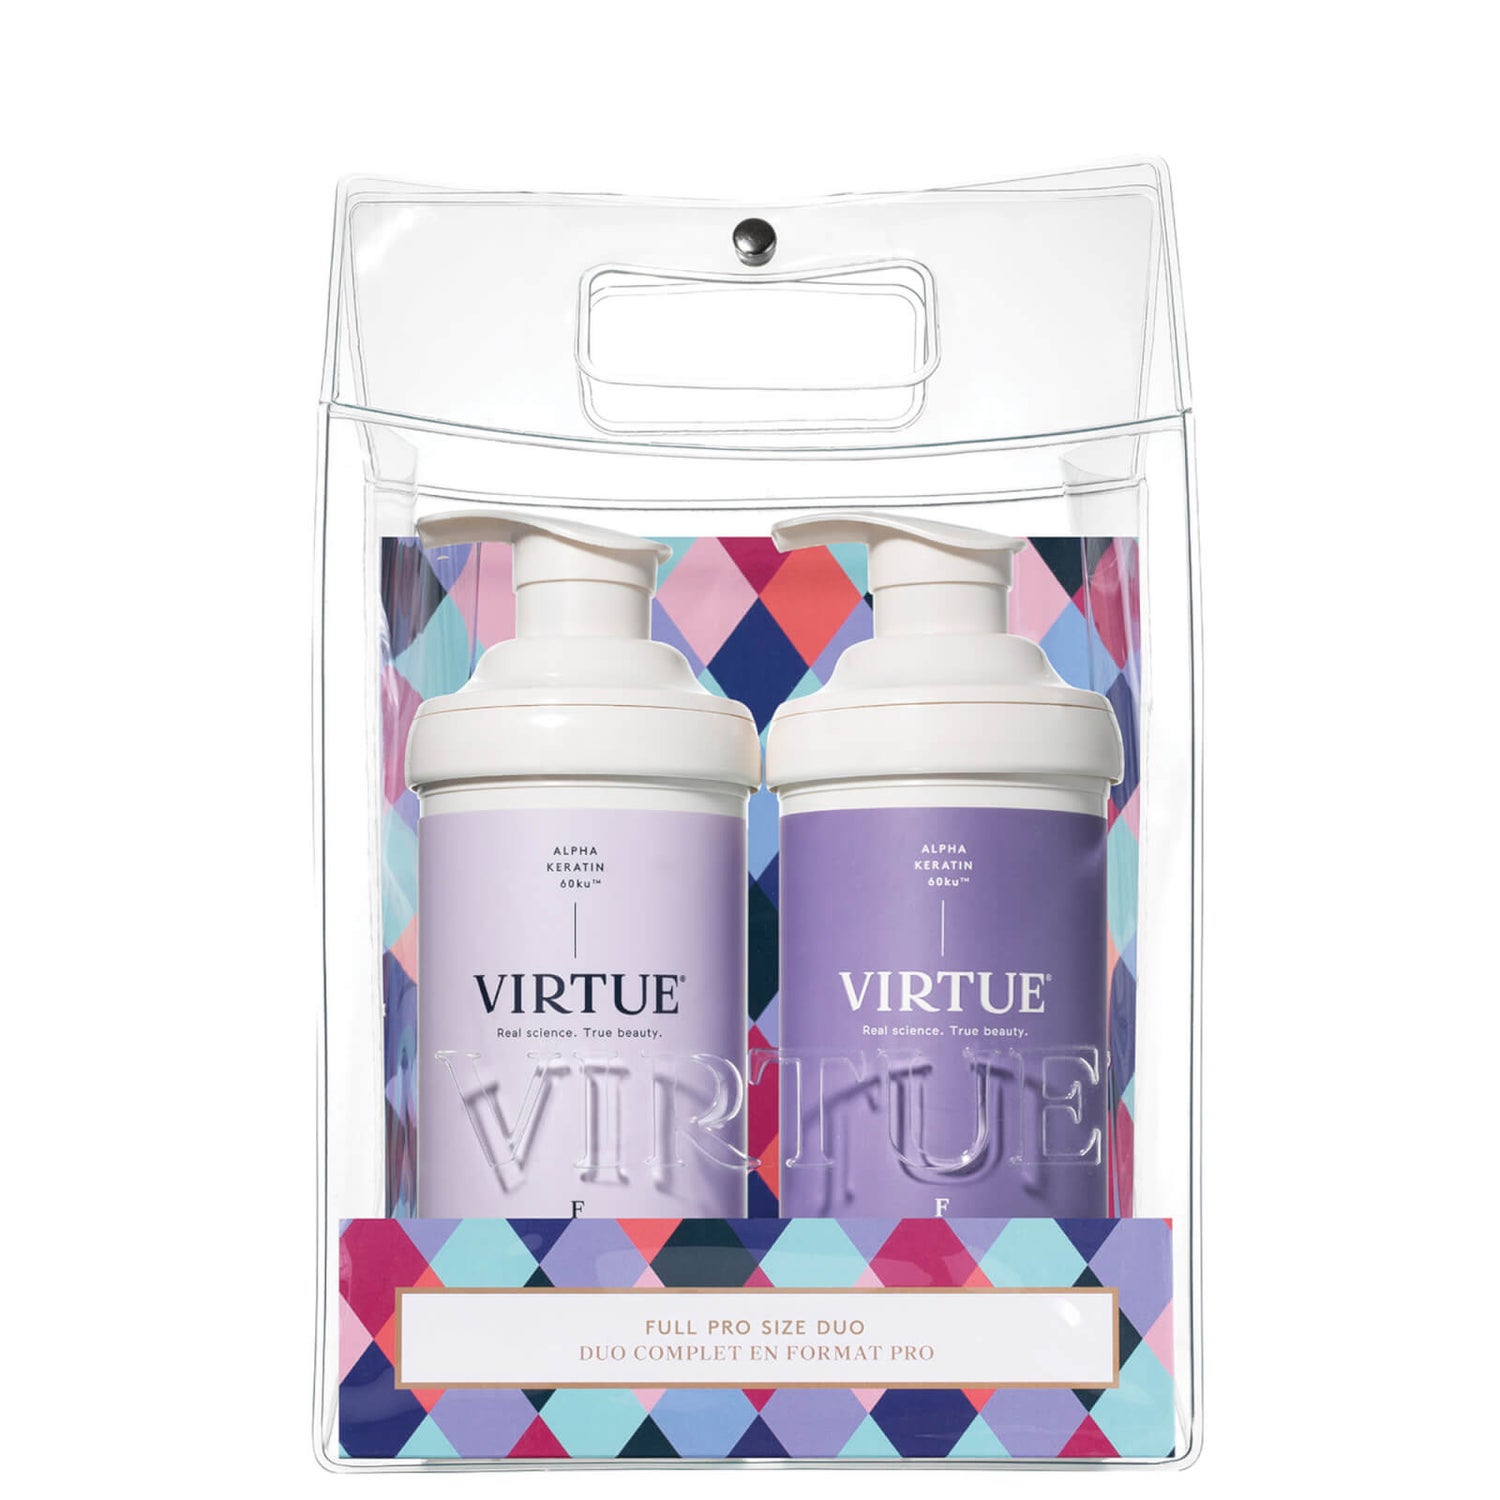 VIRTUE Celebrate Hair Repair Full Pro Size Duo (Worth $168.00)